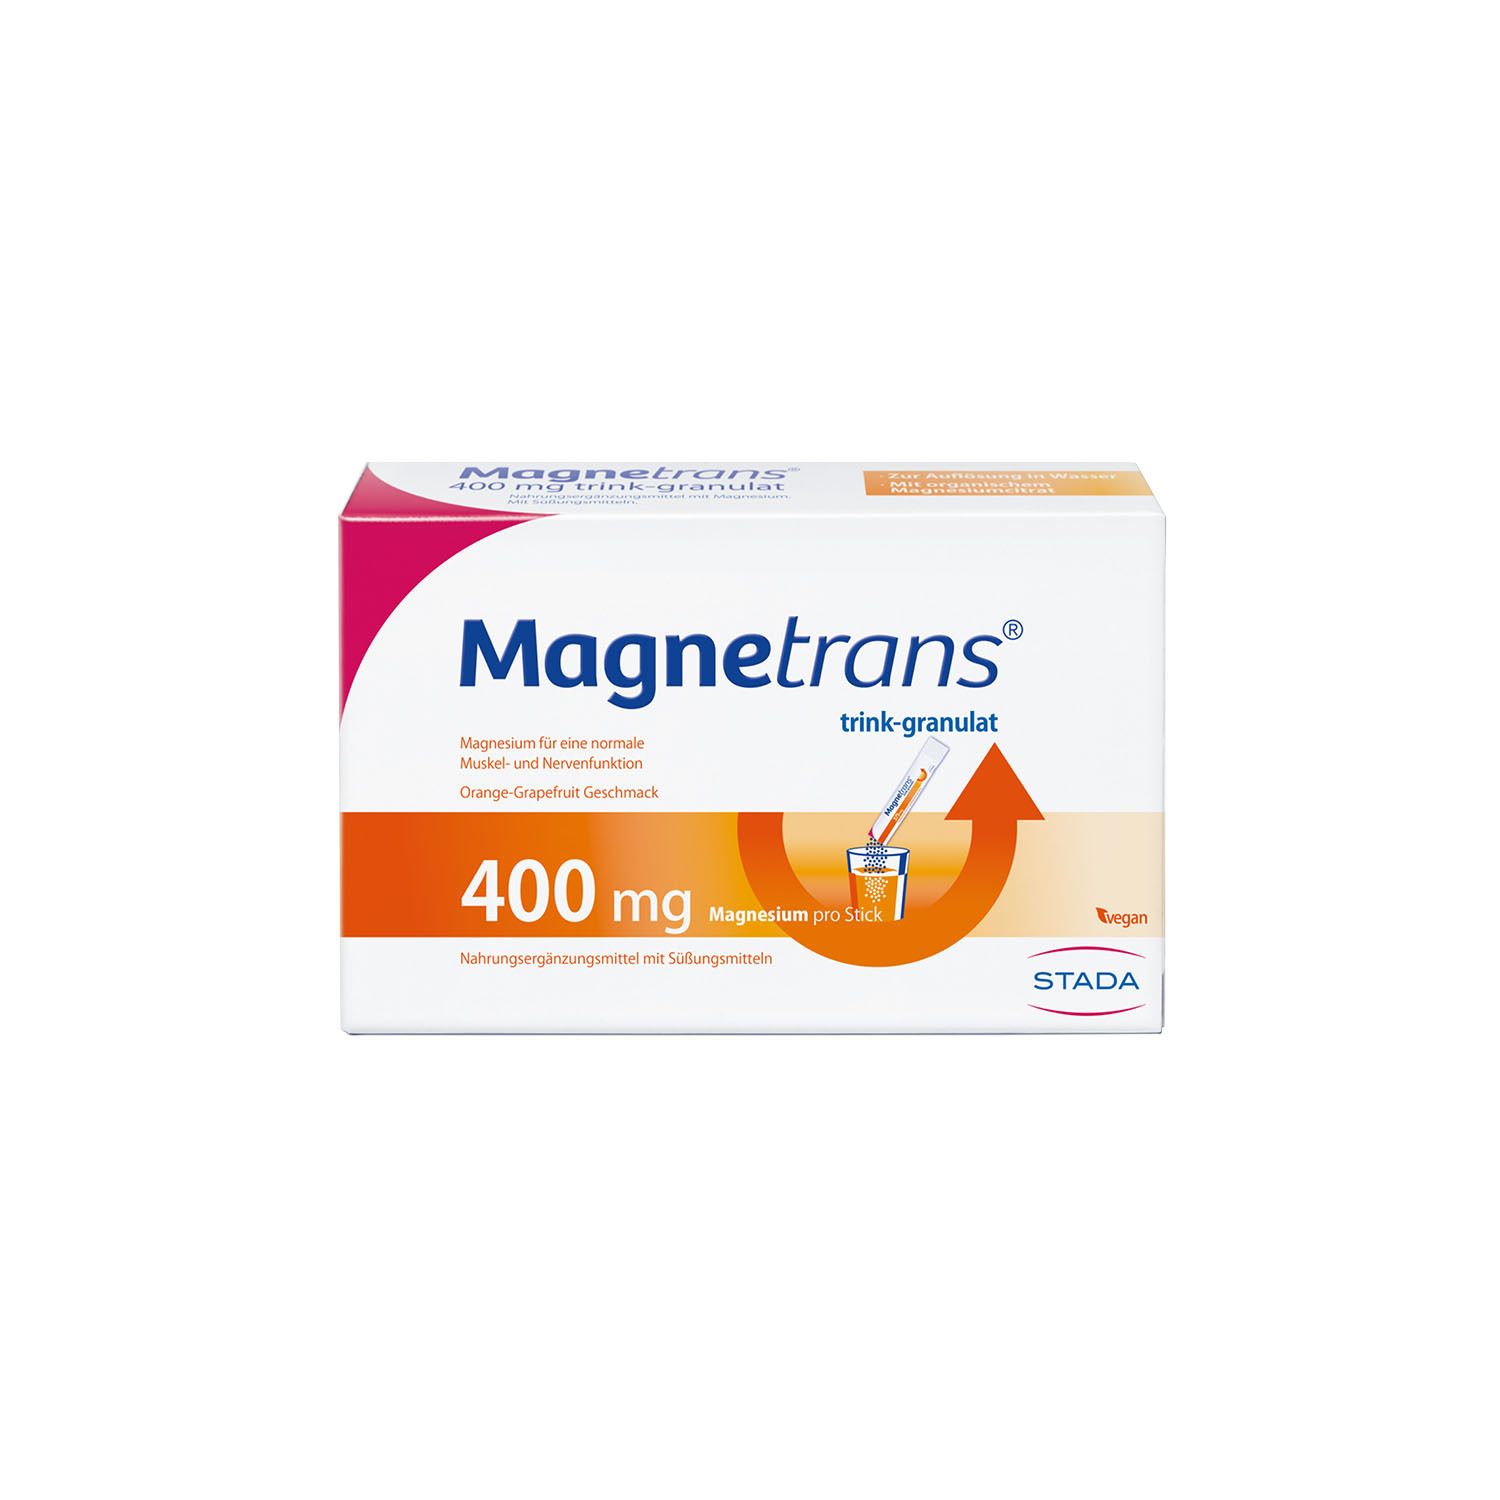 Magnetrans® 400 mg trink-granulat